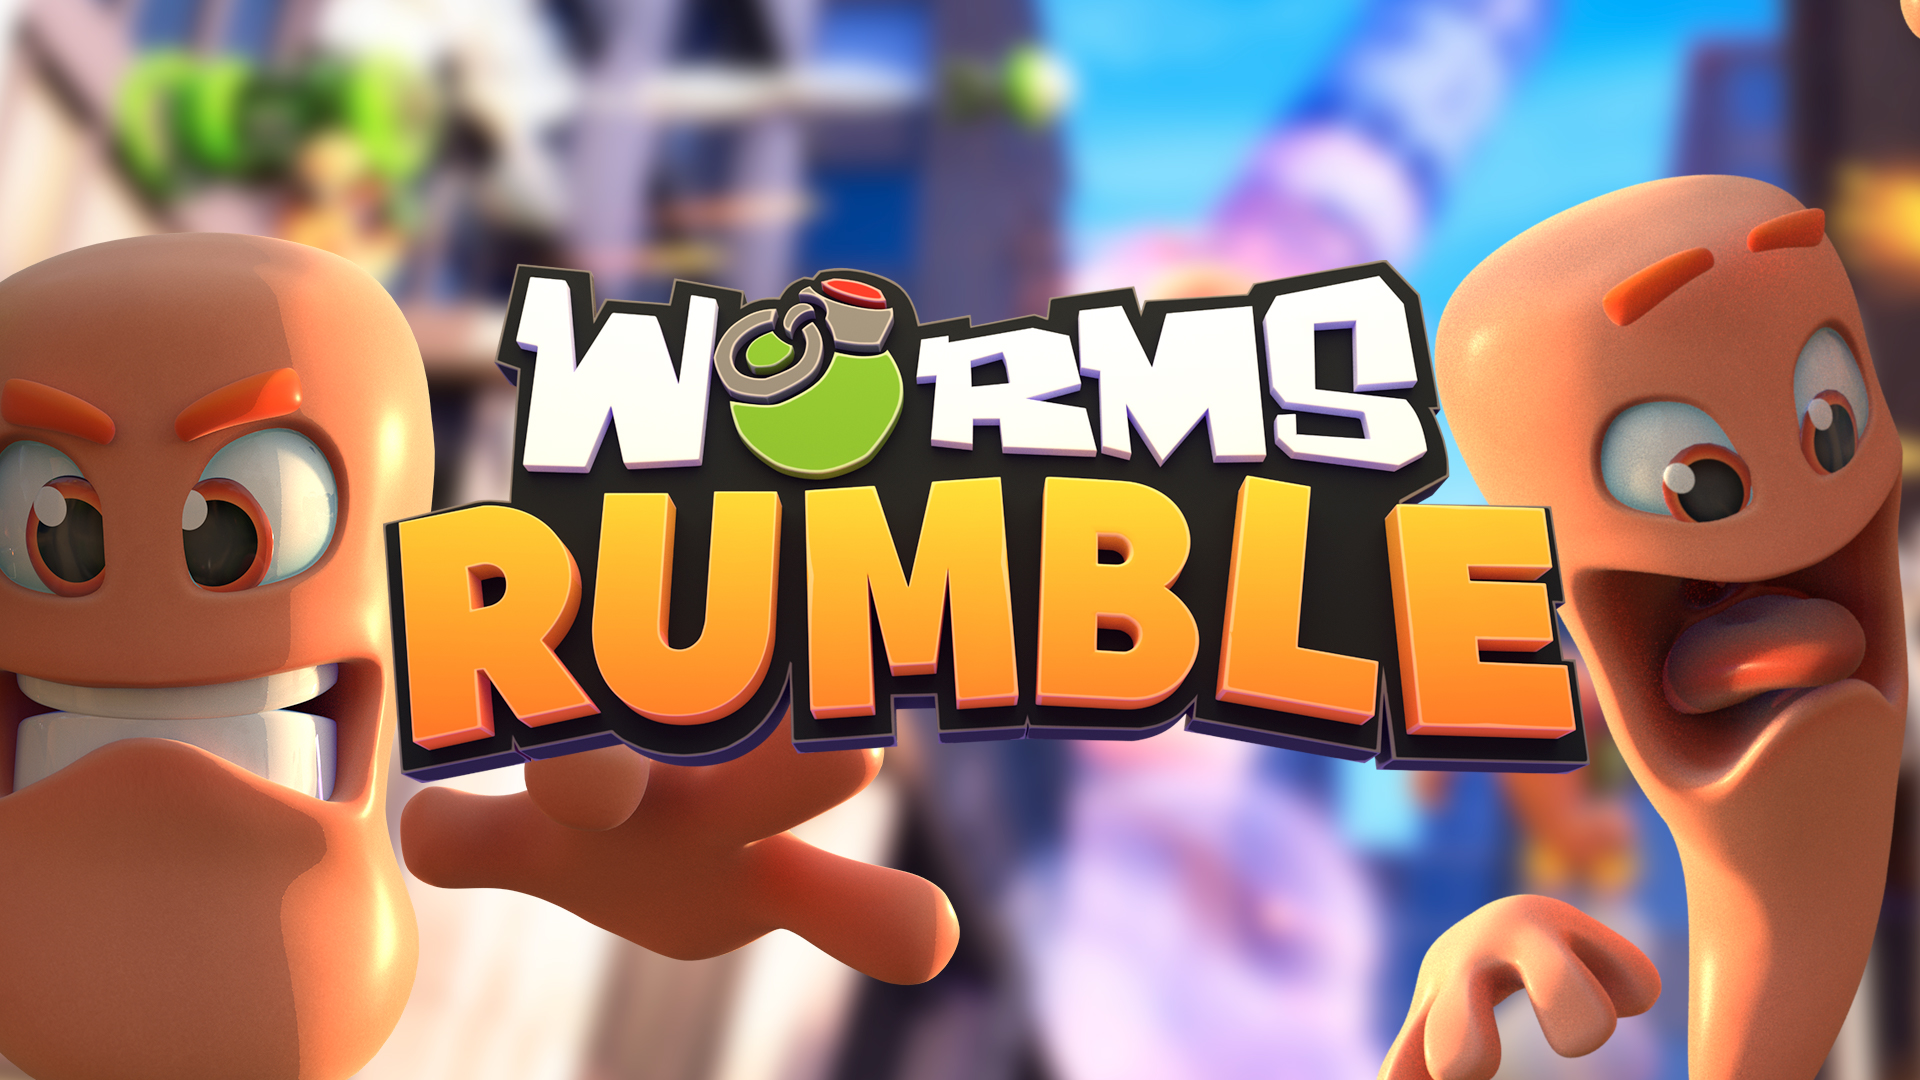 Worms Rumble Faq Team17 Digital Ltd The Spirit Of Independent